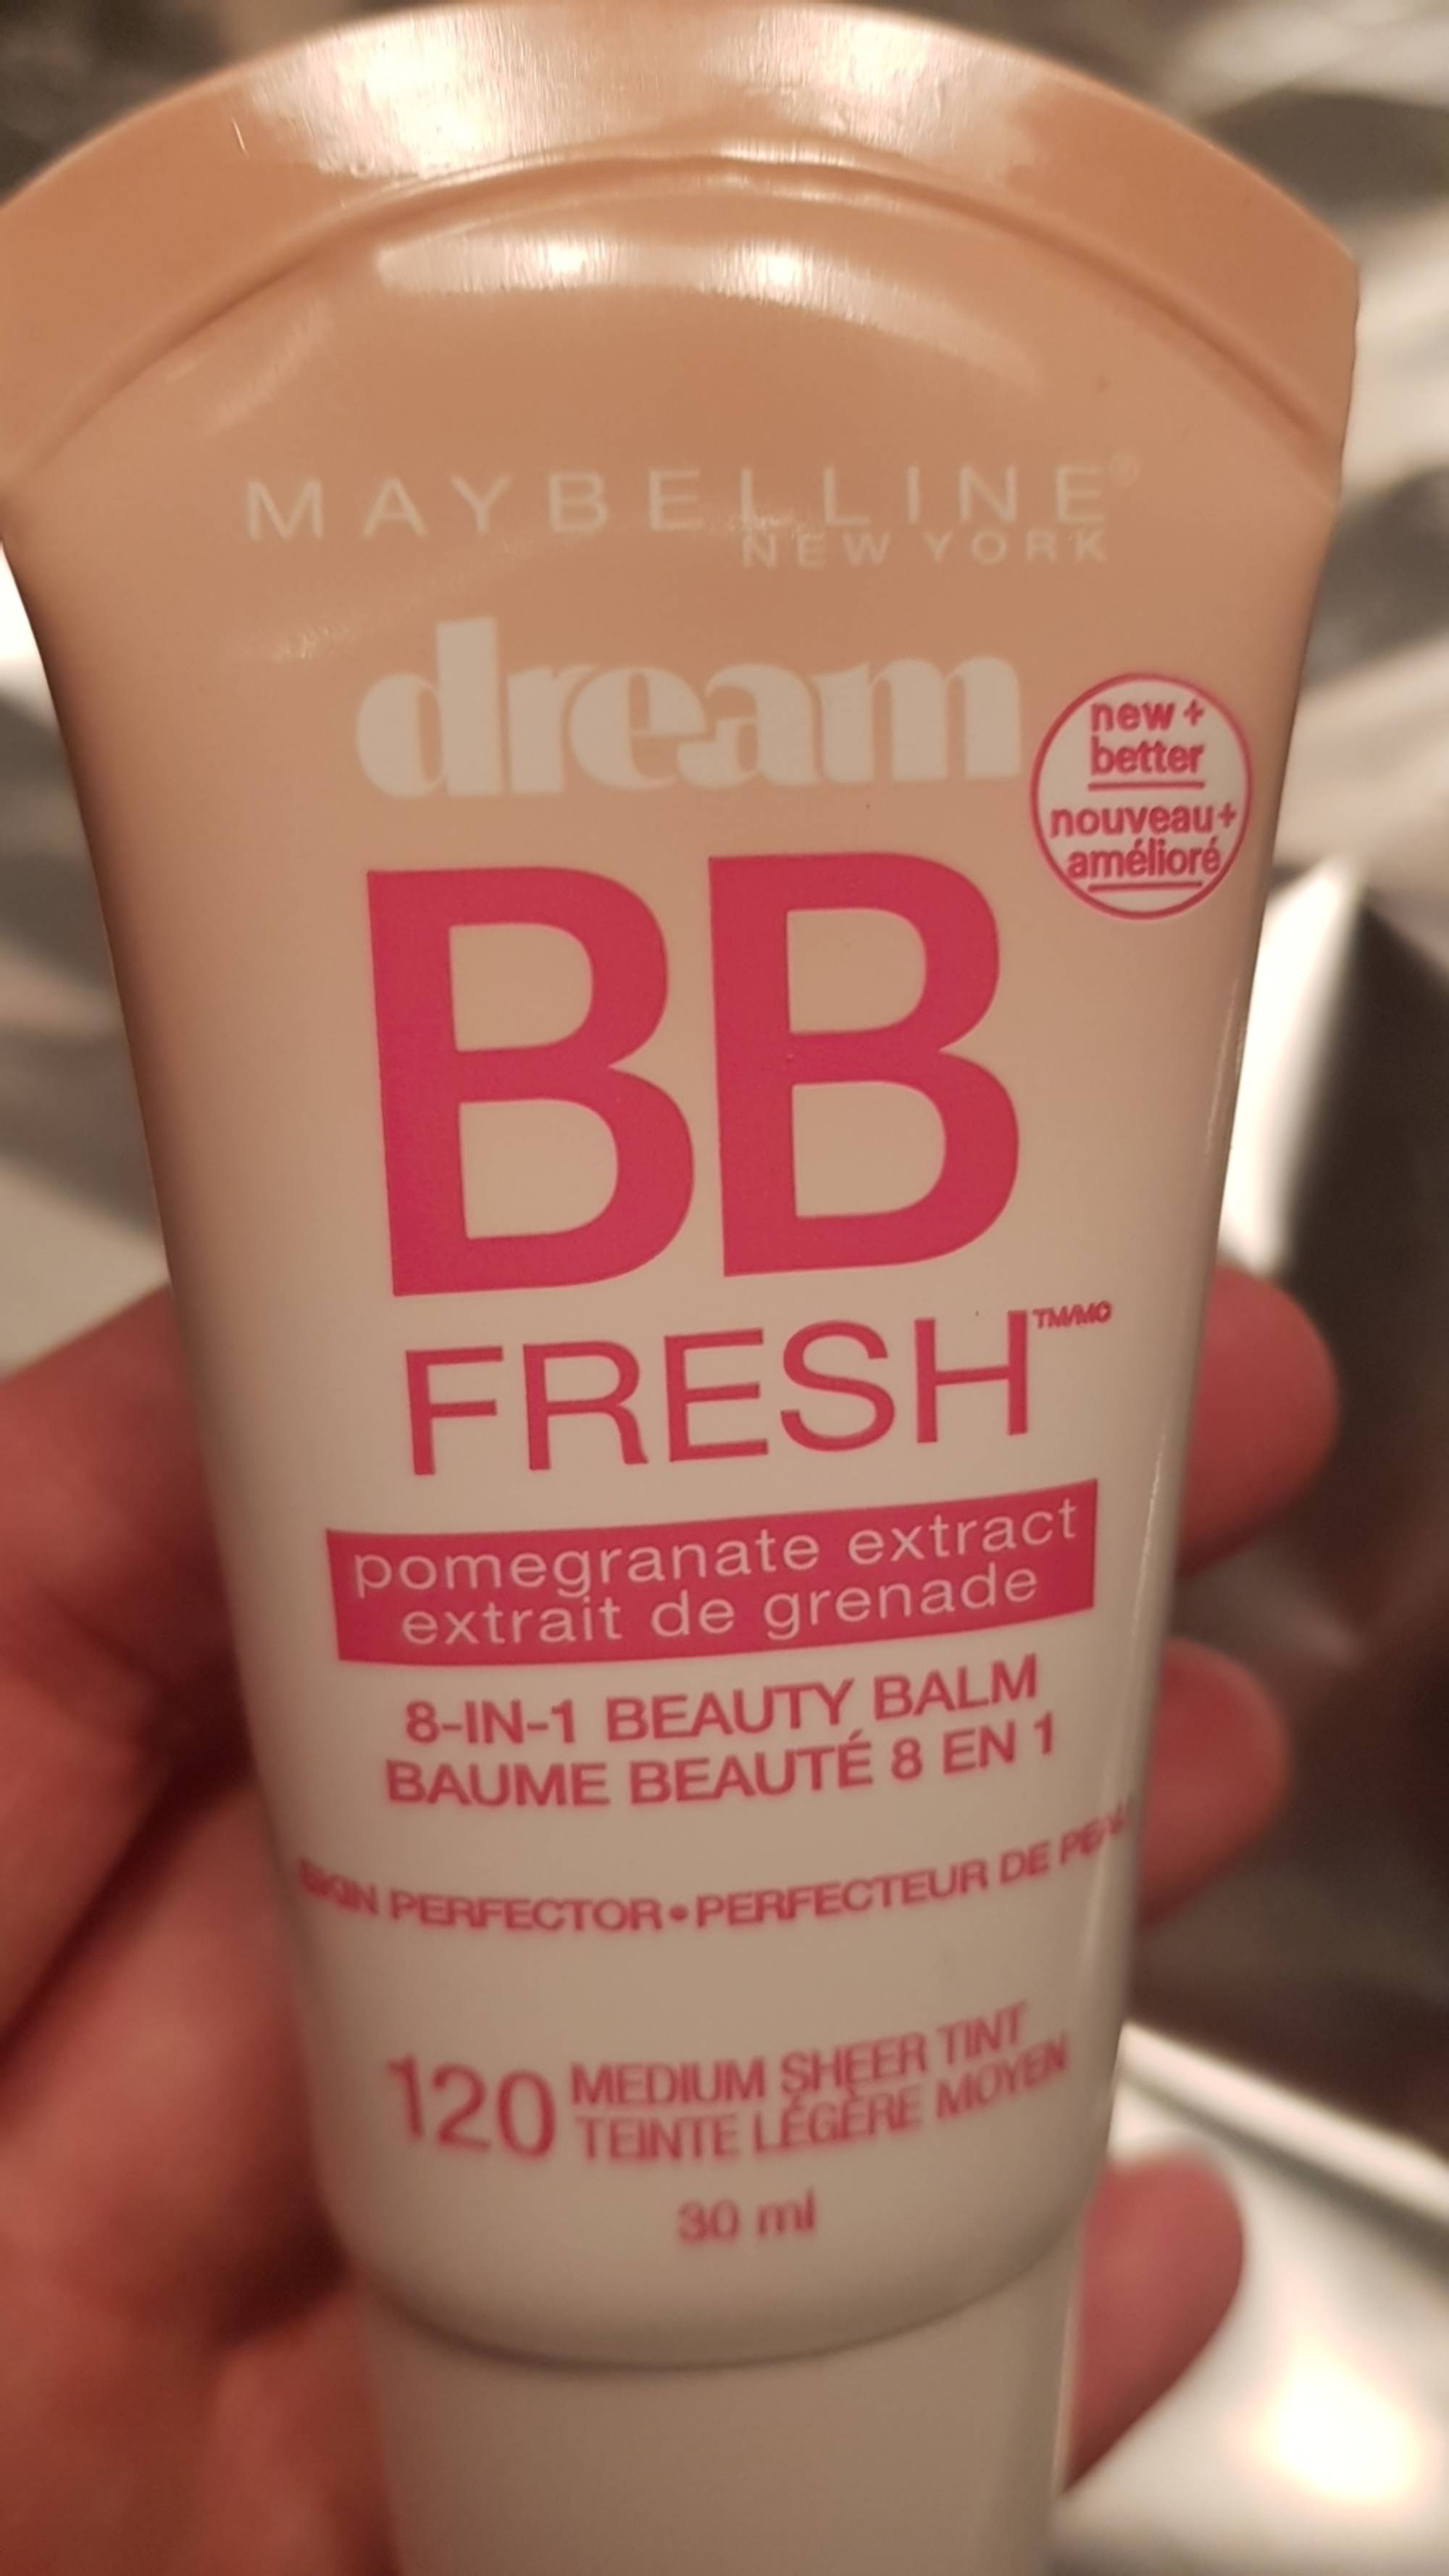 MAYBELLINE - Dream BB Fresh - Baume beauté 8 en 1